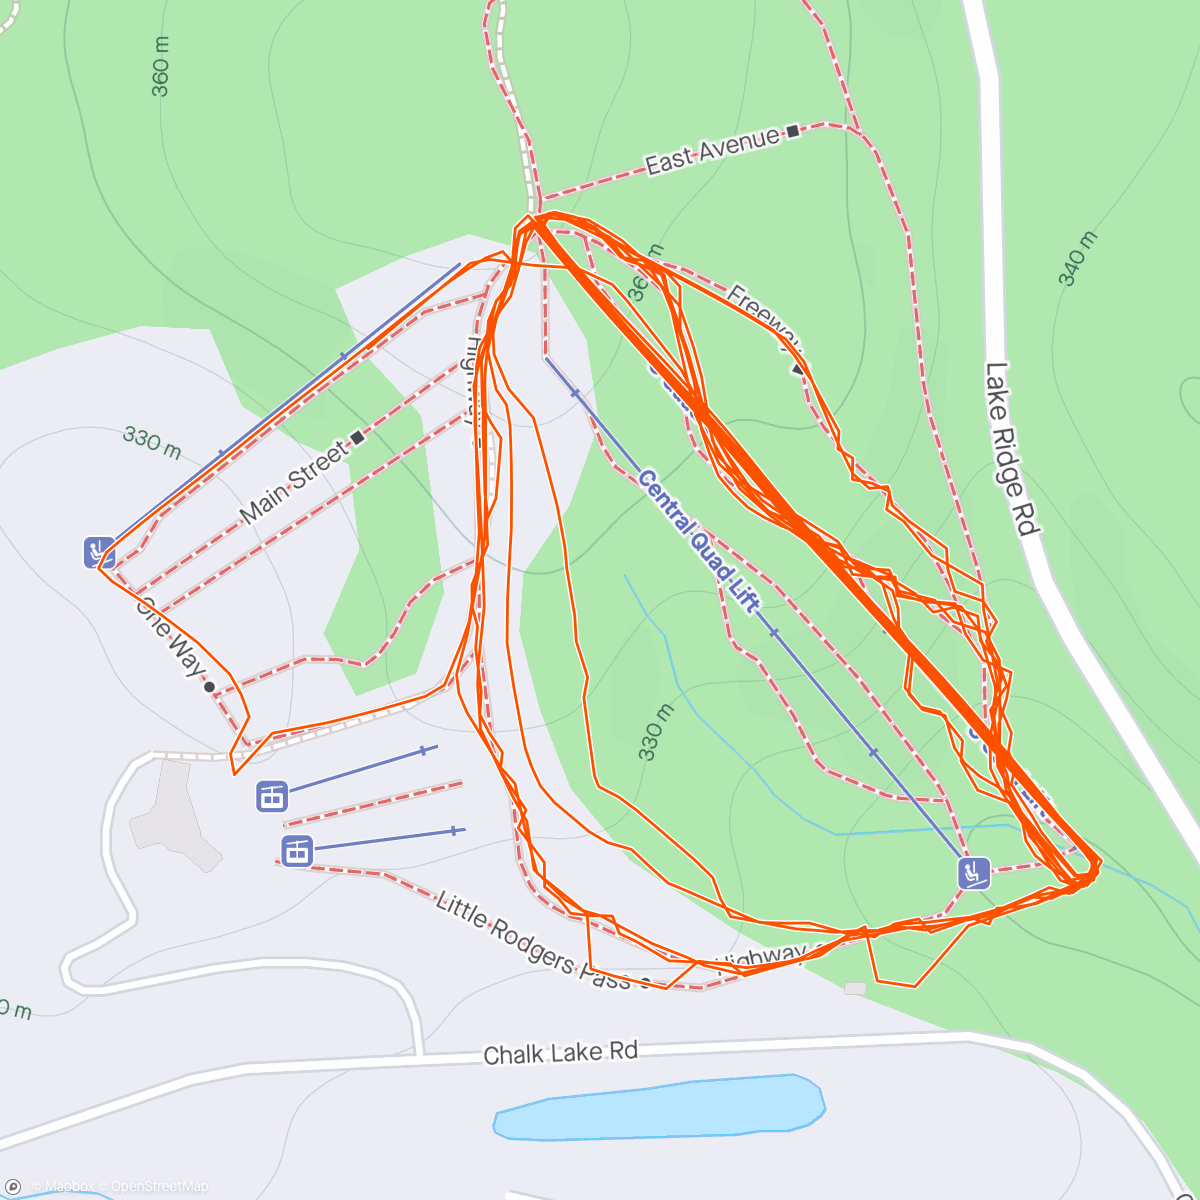 Map of the activity, Slopes - An evening snowboarding at Lakeridge Ski Resort